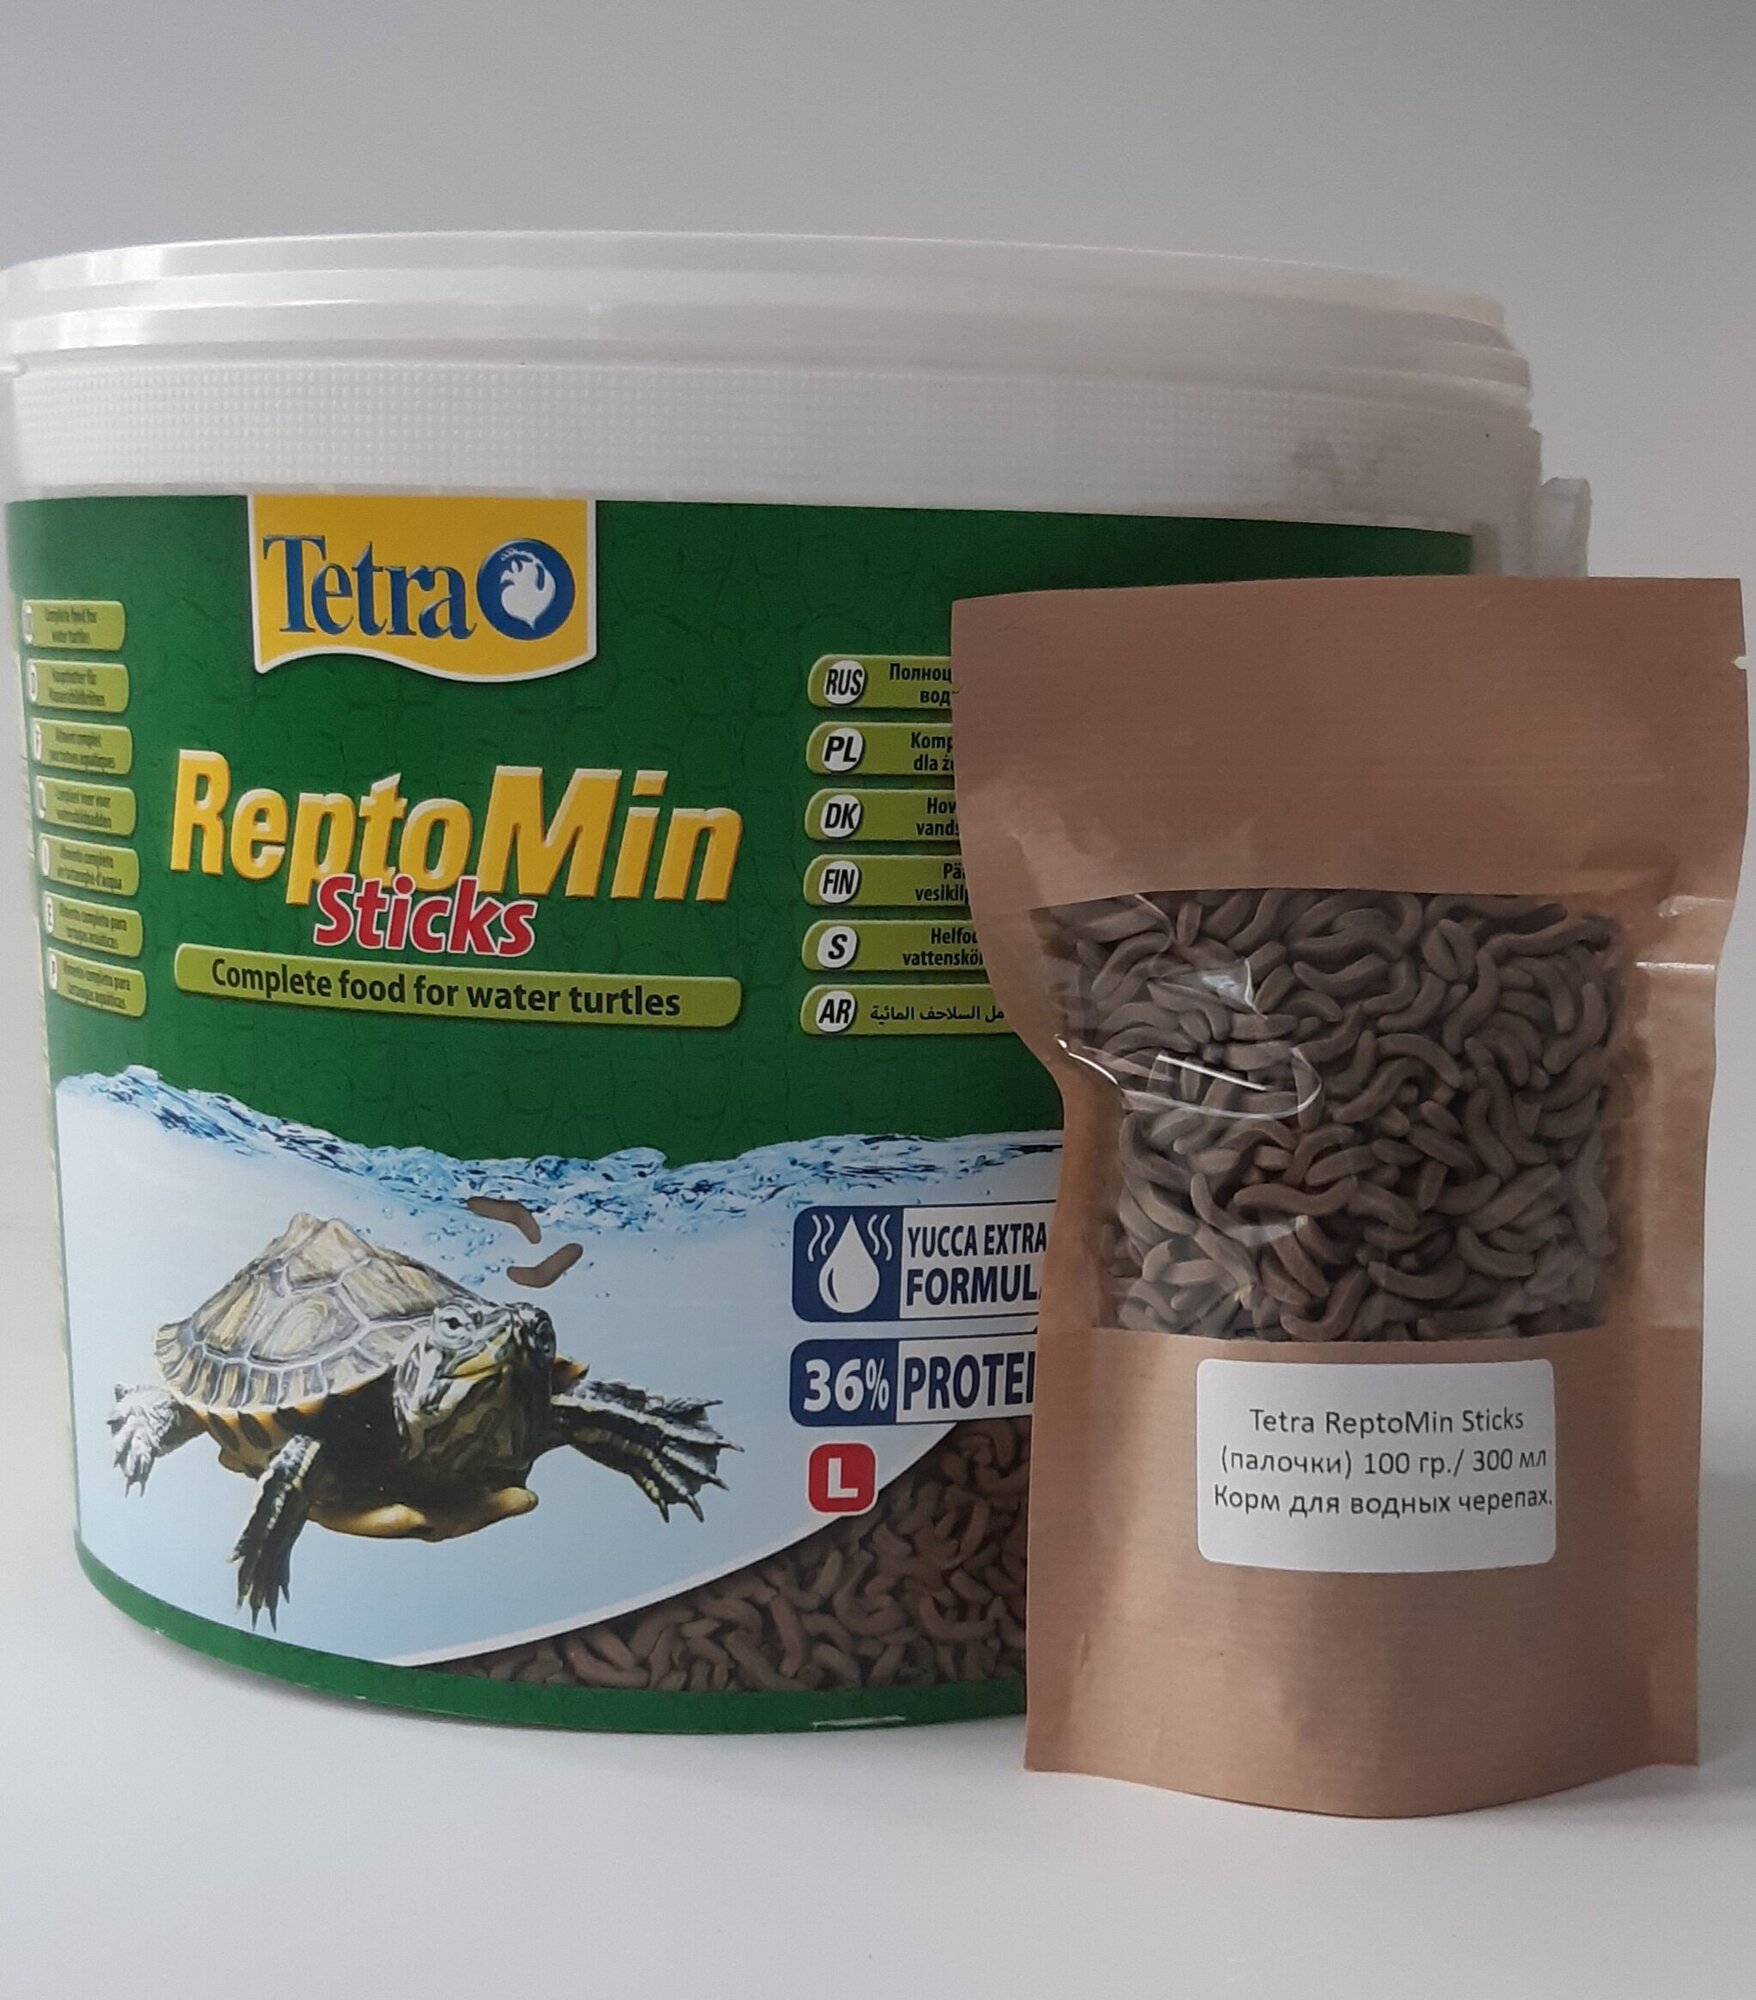 Tetra ReptoMin Sticks (палочки) 100 гр. корм для водных черепах. - фотография № 3